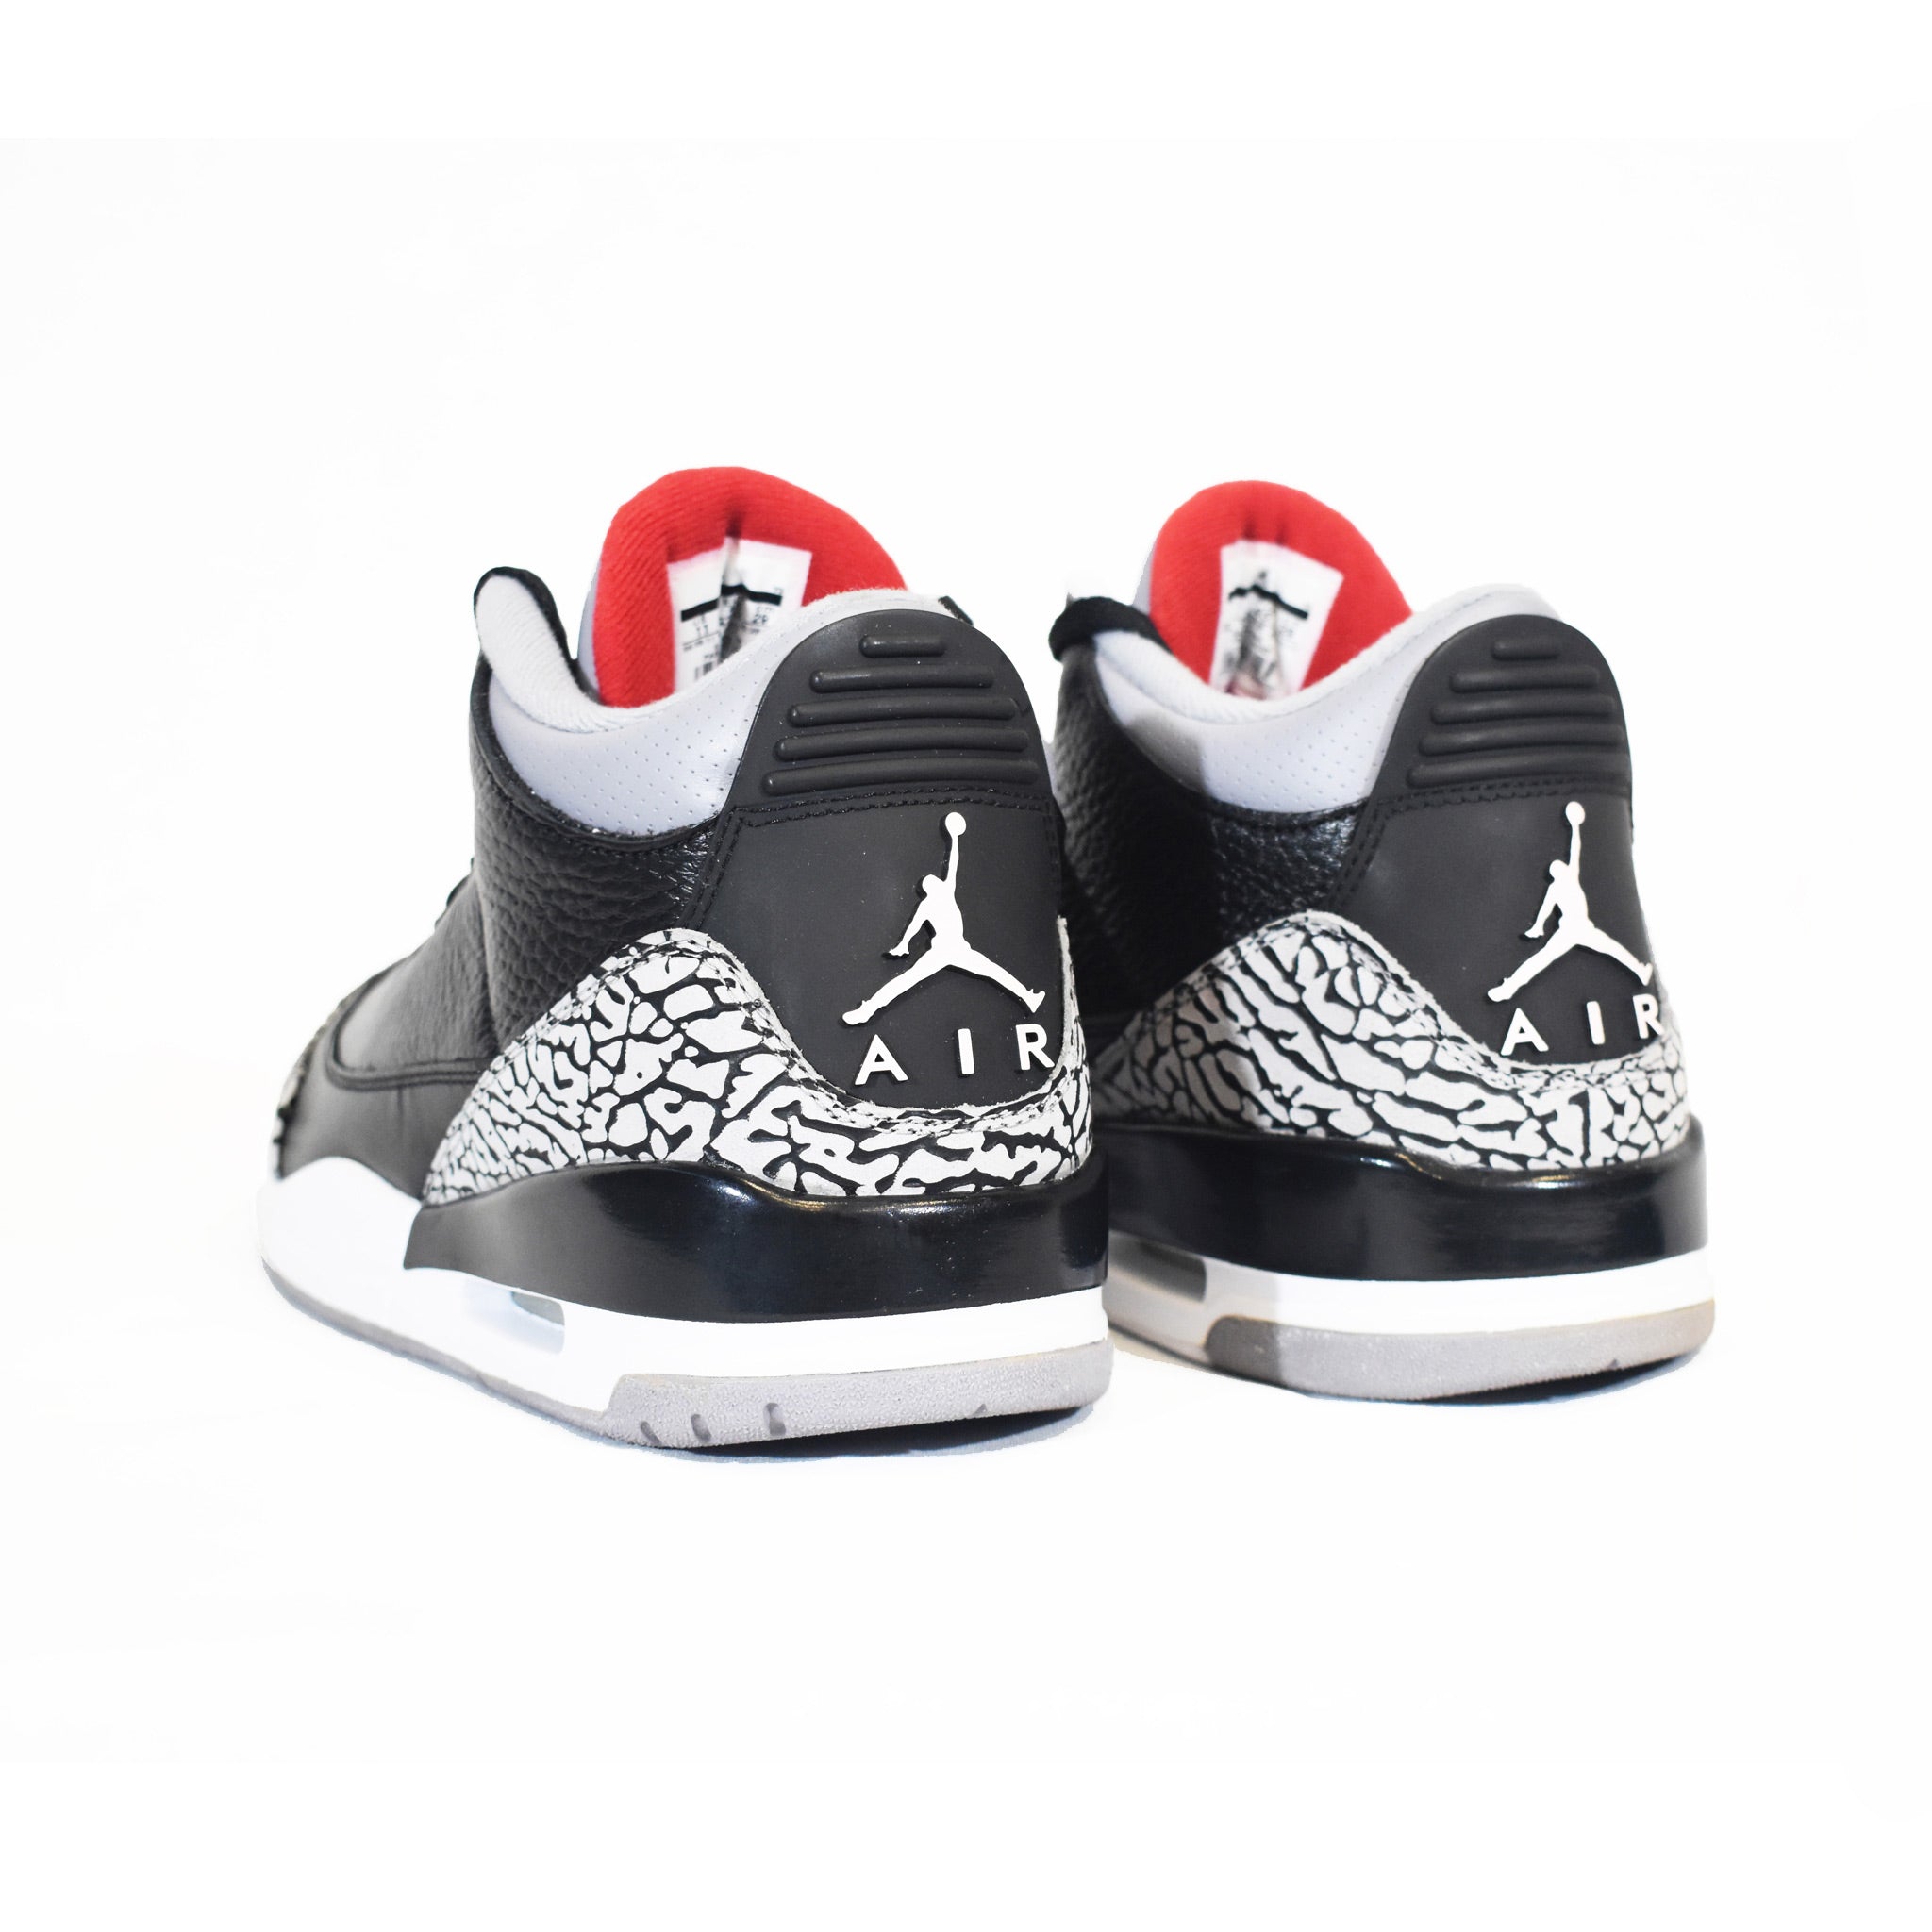 Nike Air Jordan 3 Retro - Black Cement 2011 | Australia New Zealand 